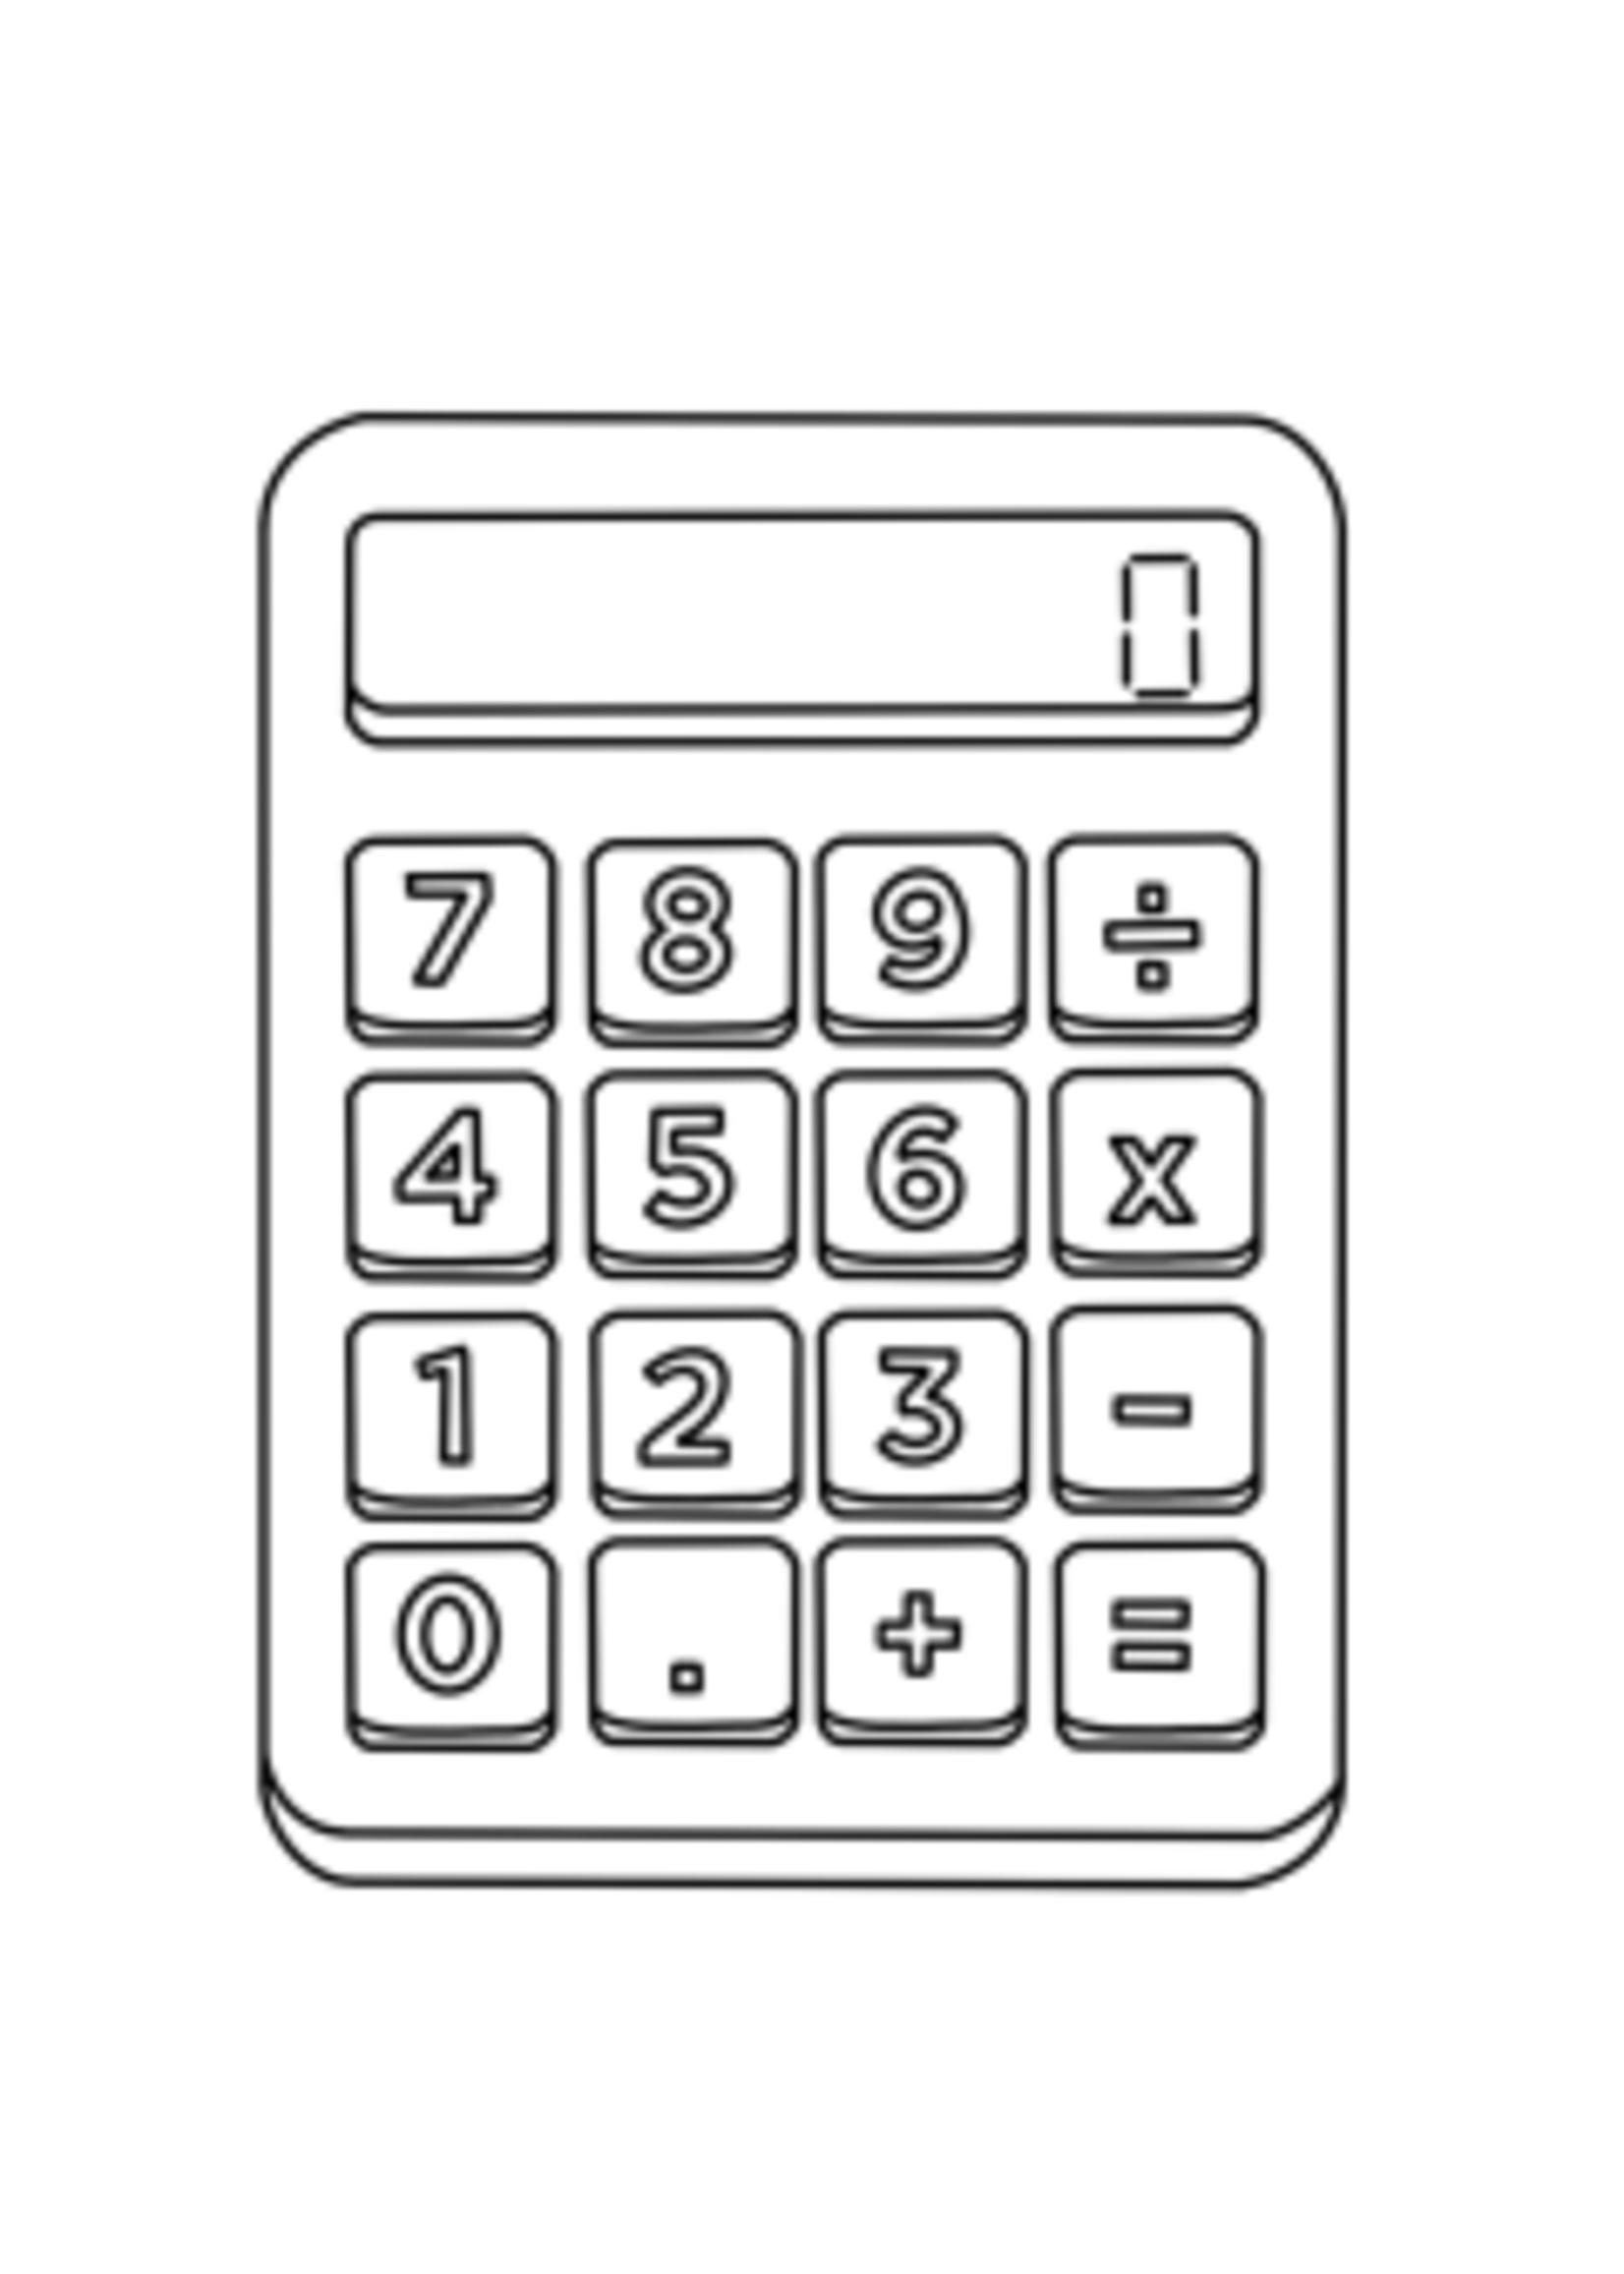 NON-UNIFORM CALCULATOR - JDCHS Club Kiosk Calculator